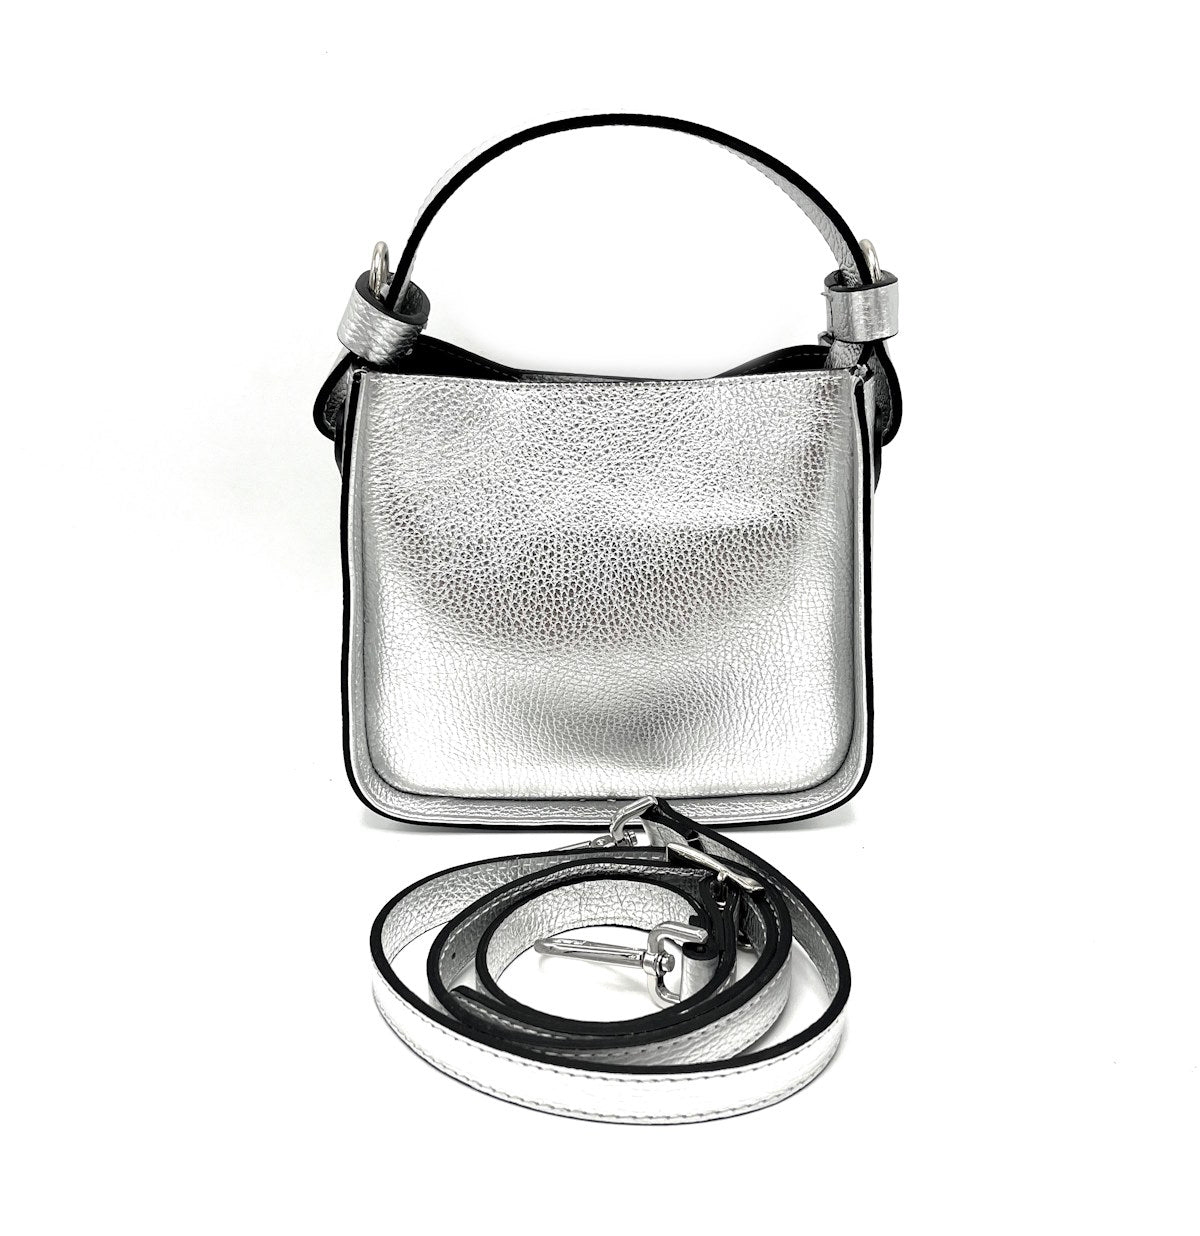 Genuine leather handbag, Made in Italy, art. 112303/LA